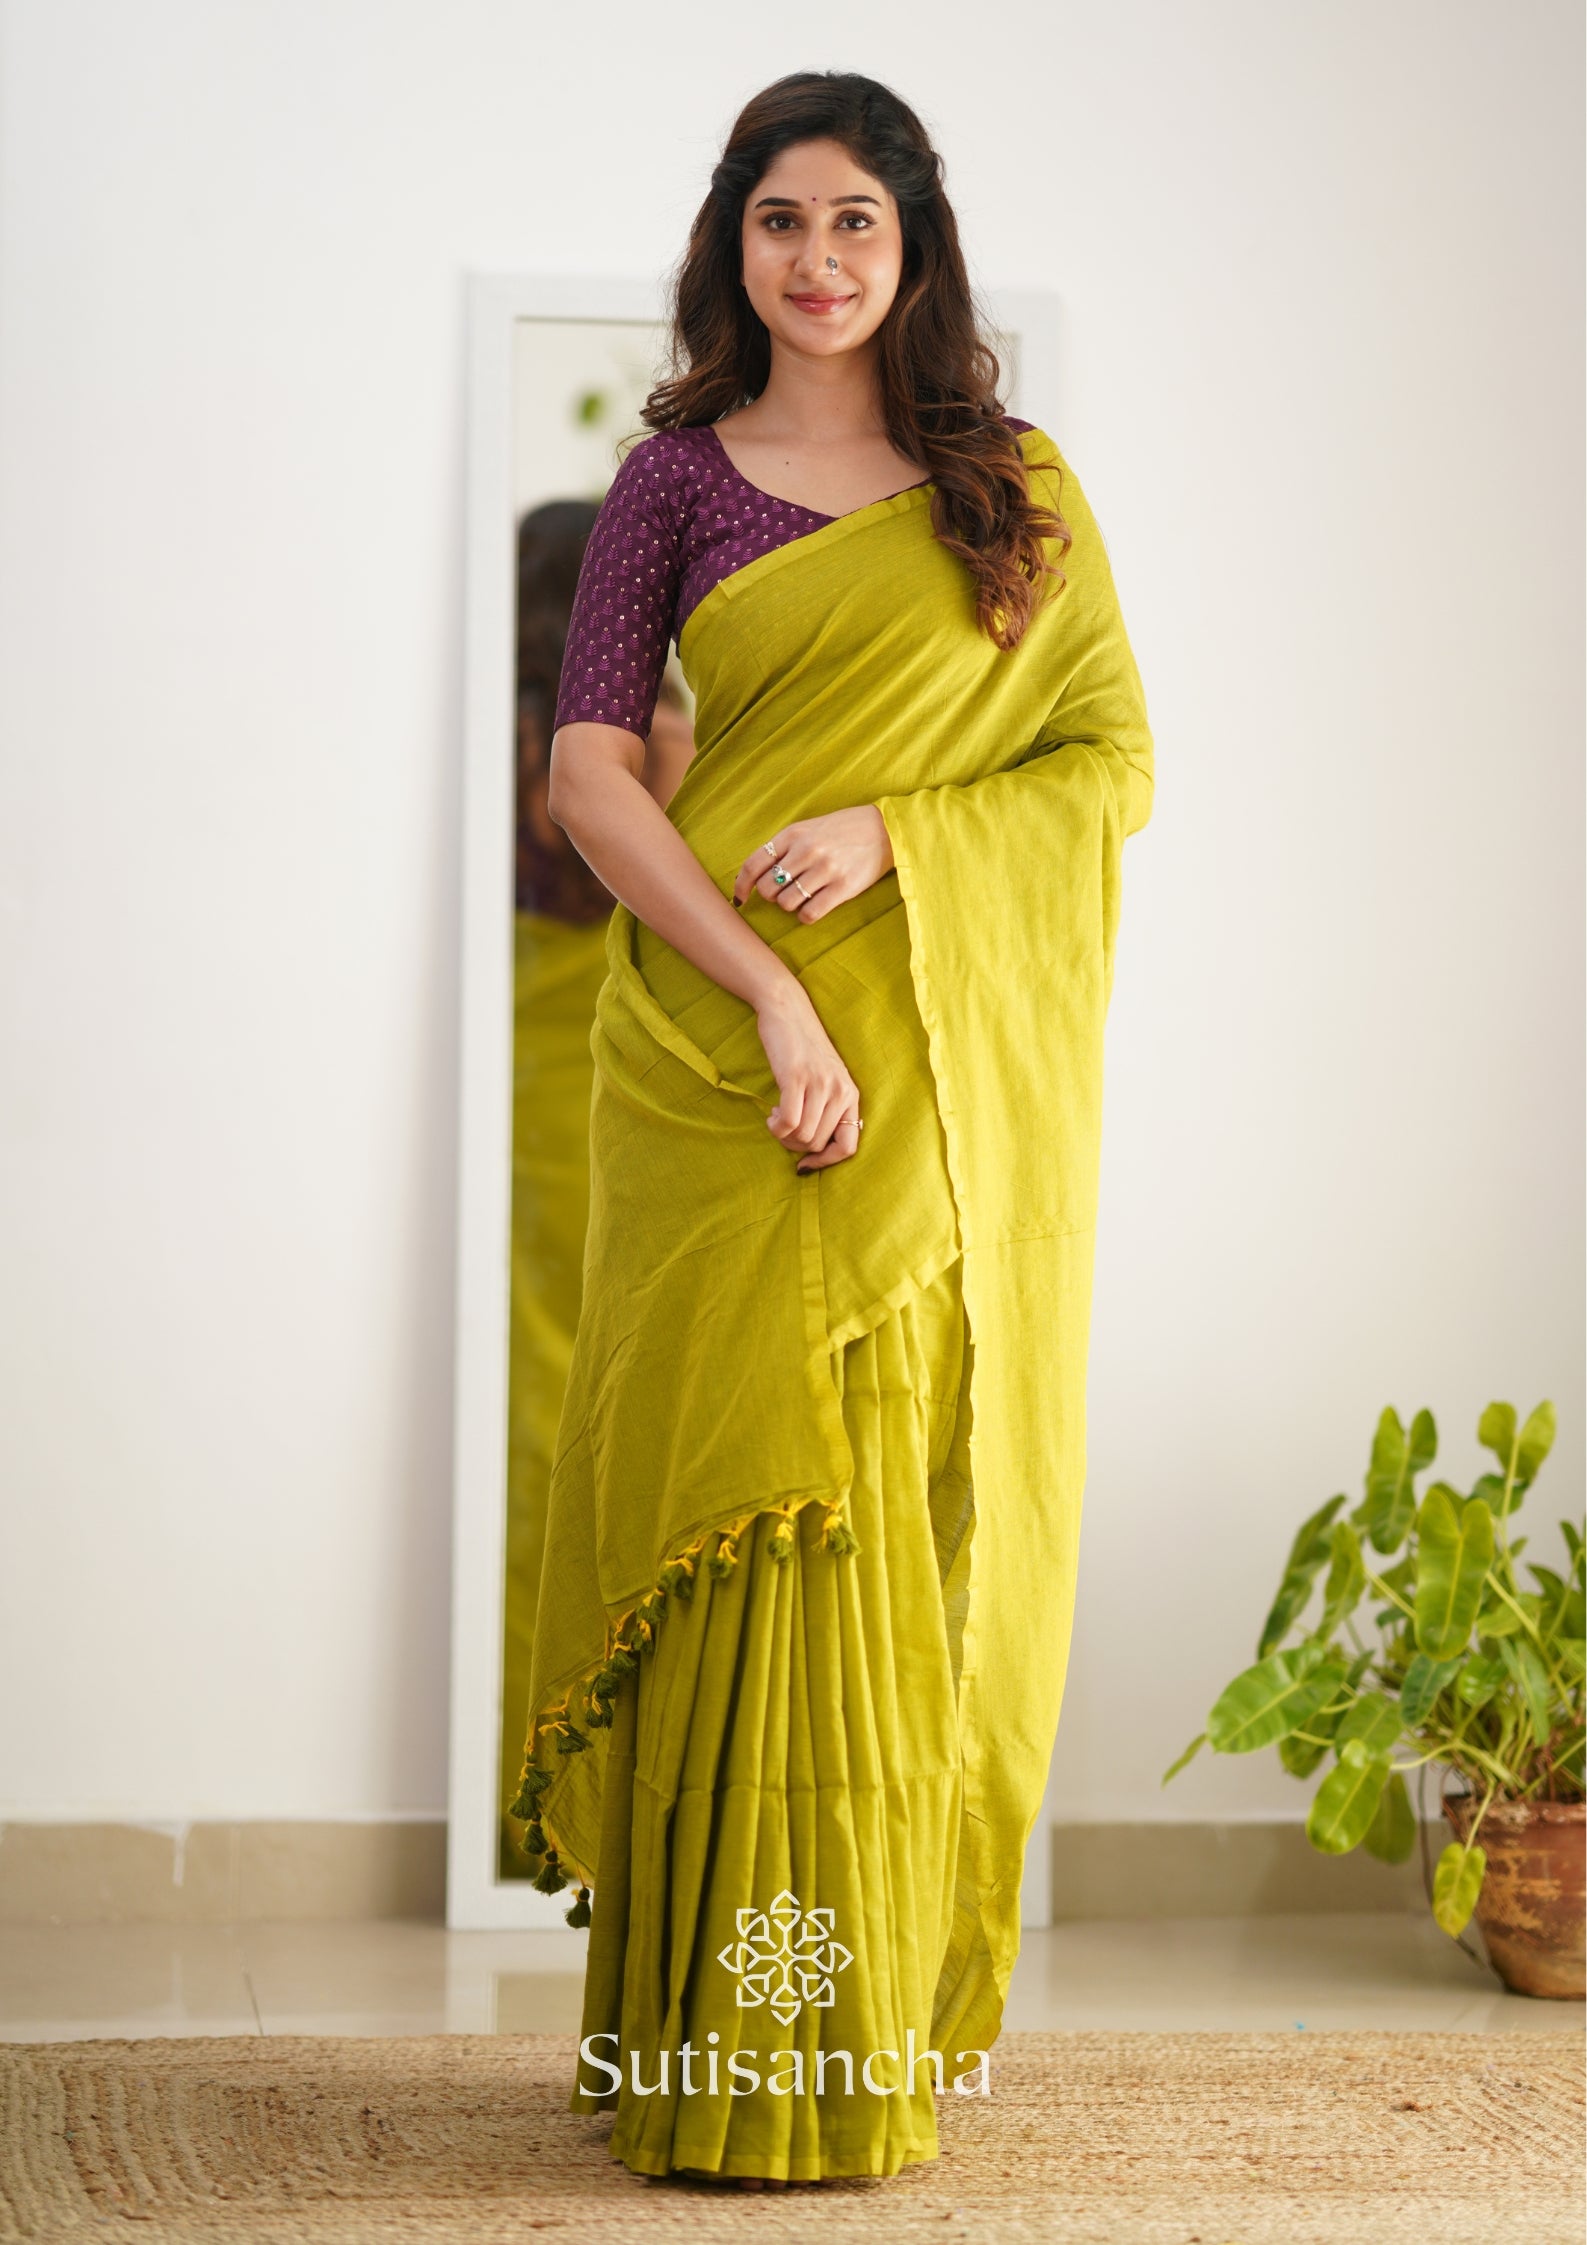 Sutisancha Lime colour Handloom Cotton Saree with Designer Blouse